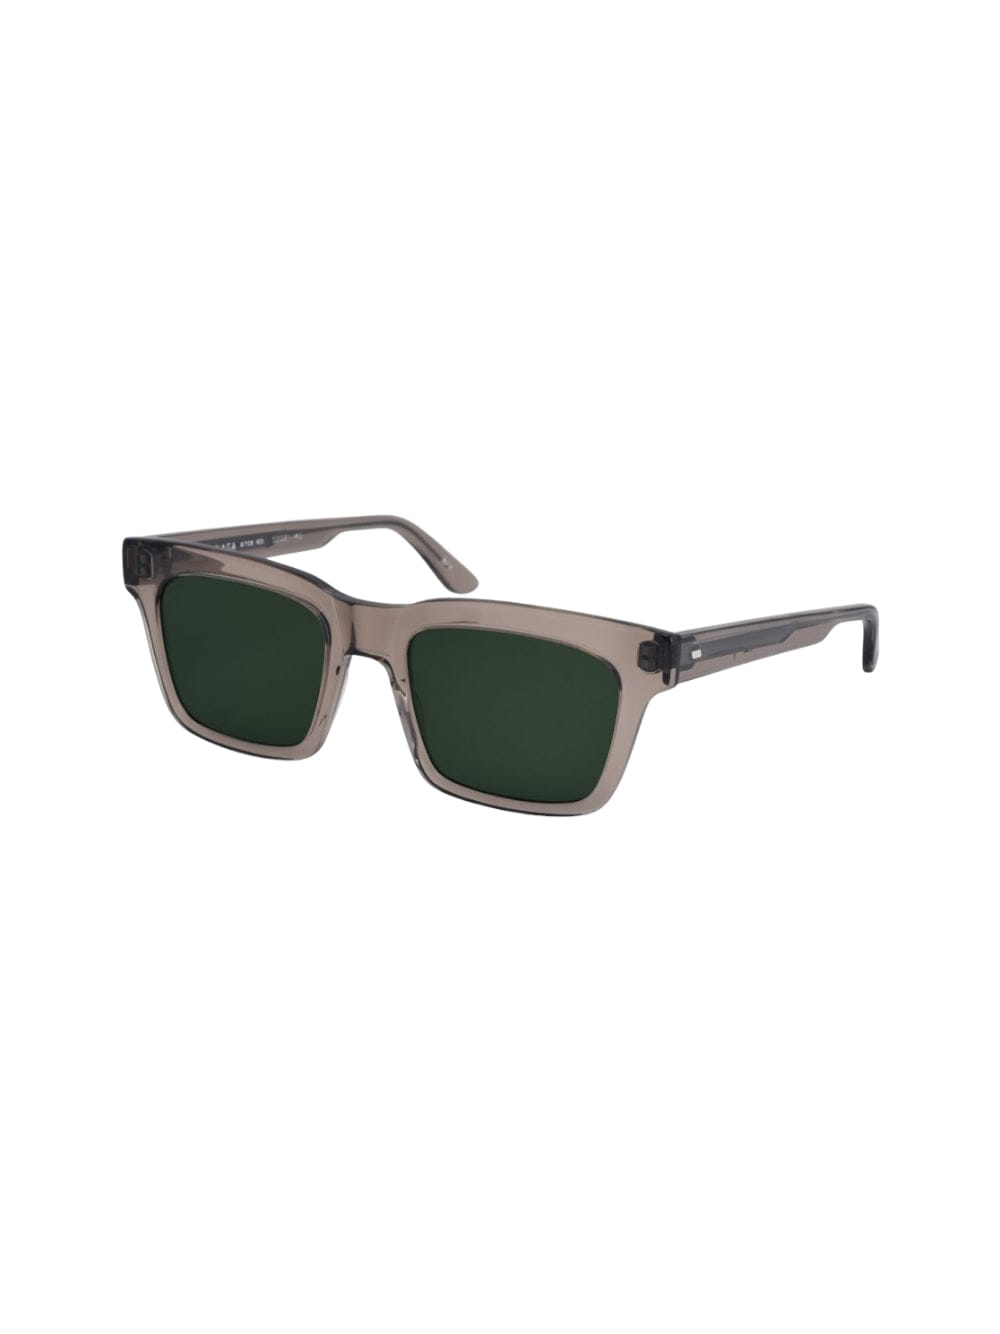 Masunaga Kk089 - Trasparent Grey Sunglasses